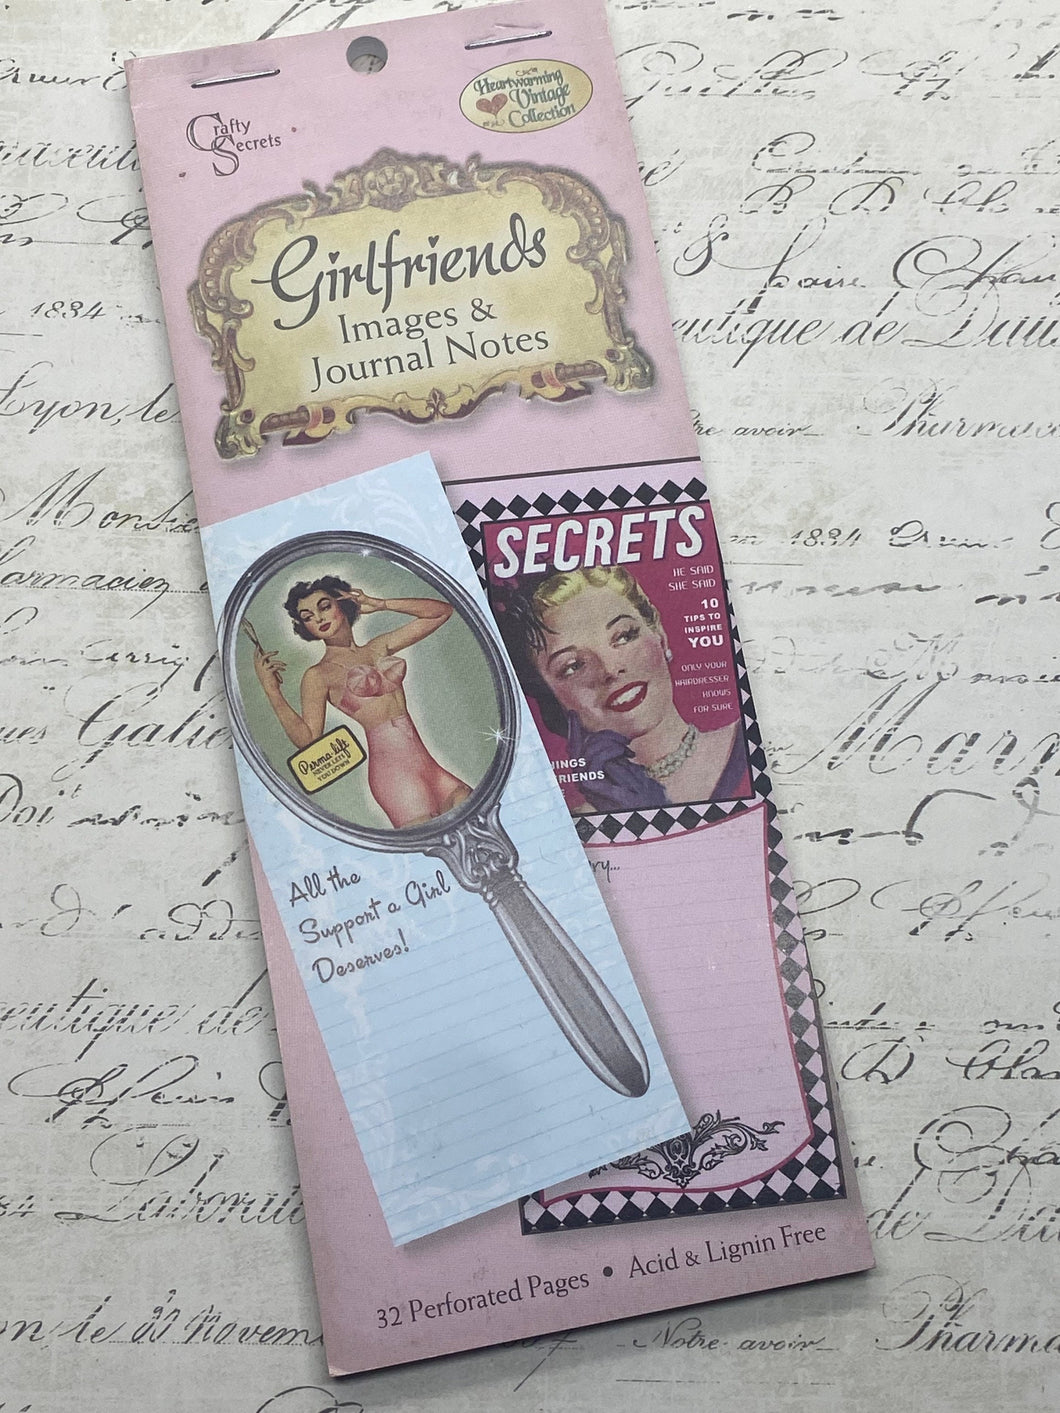 Crafty Secrets Heartwarming Vintage Image Journal - Girlfriends